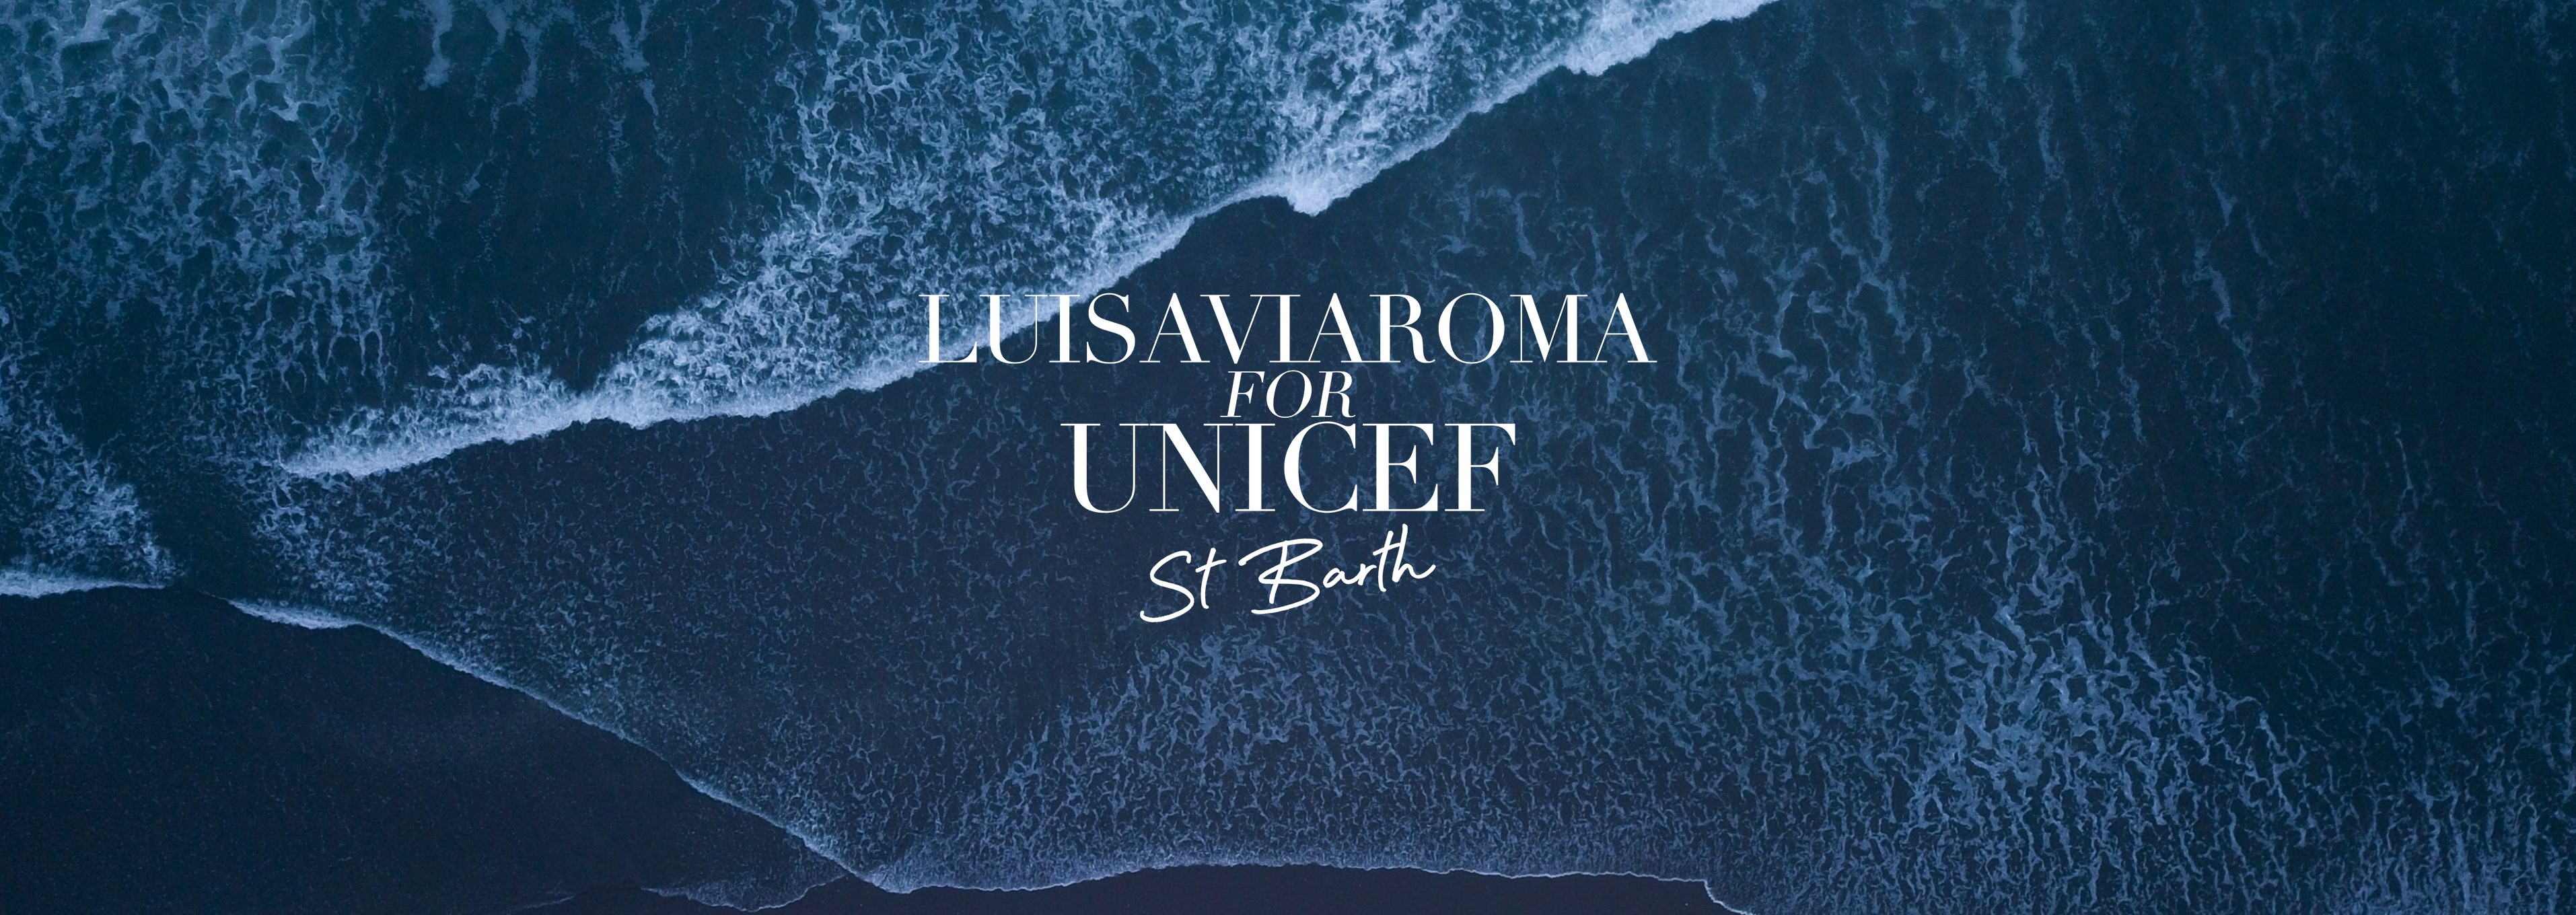 LuisaViaRoma in St. Barth for Unicef 2021